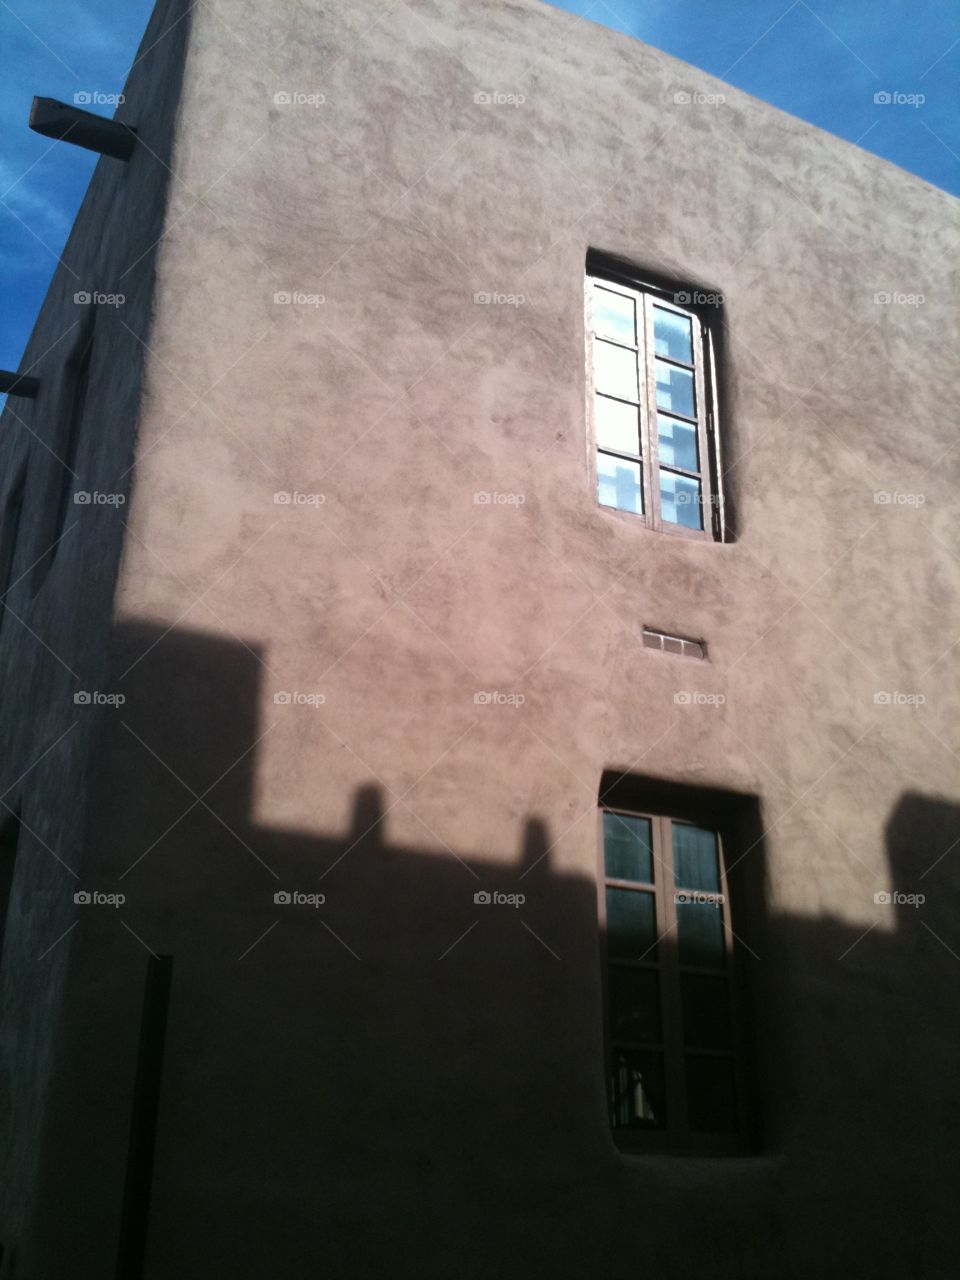 Shadows. Shadows on a building in Santa Fe, NM.